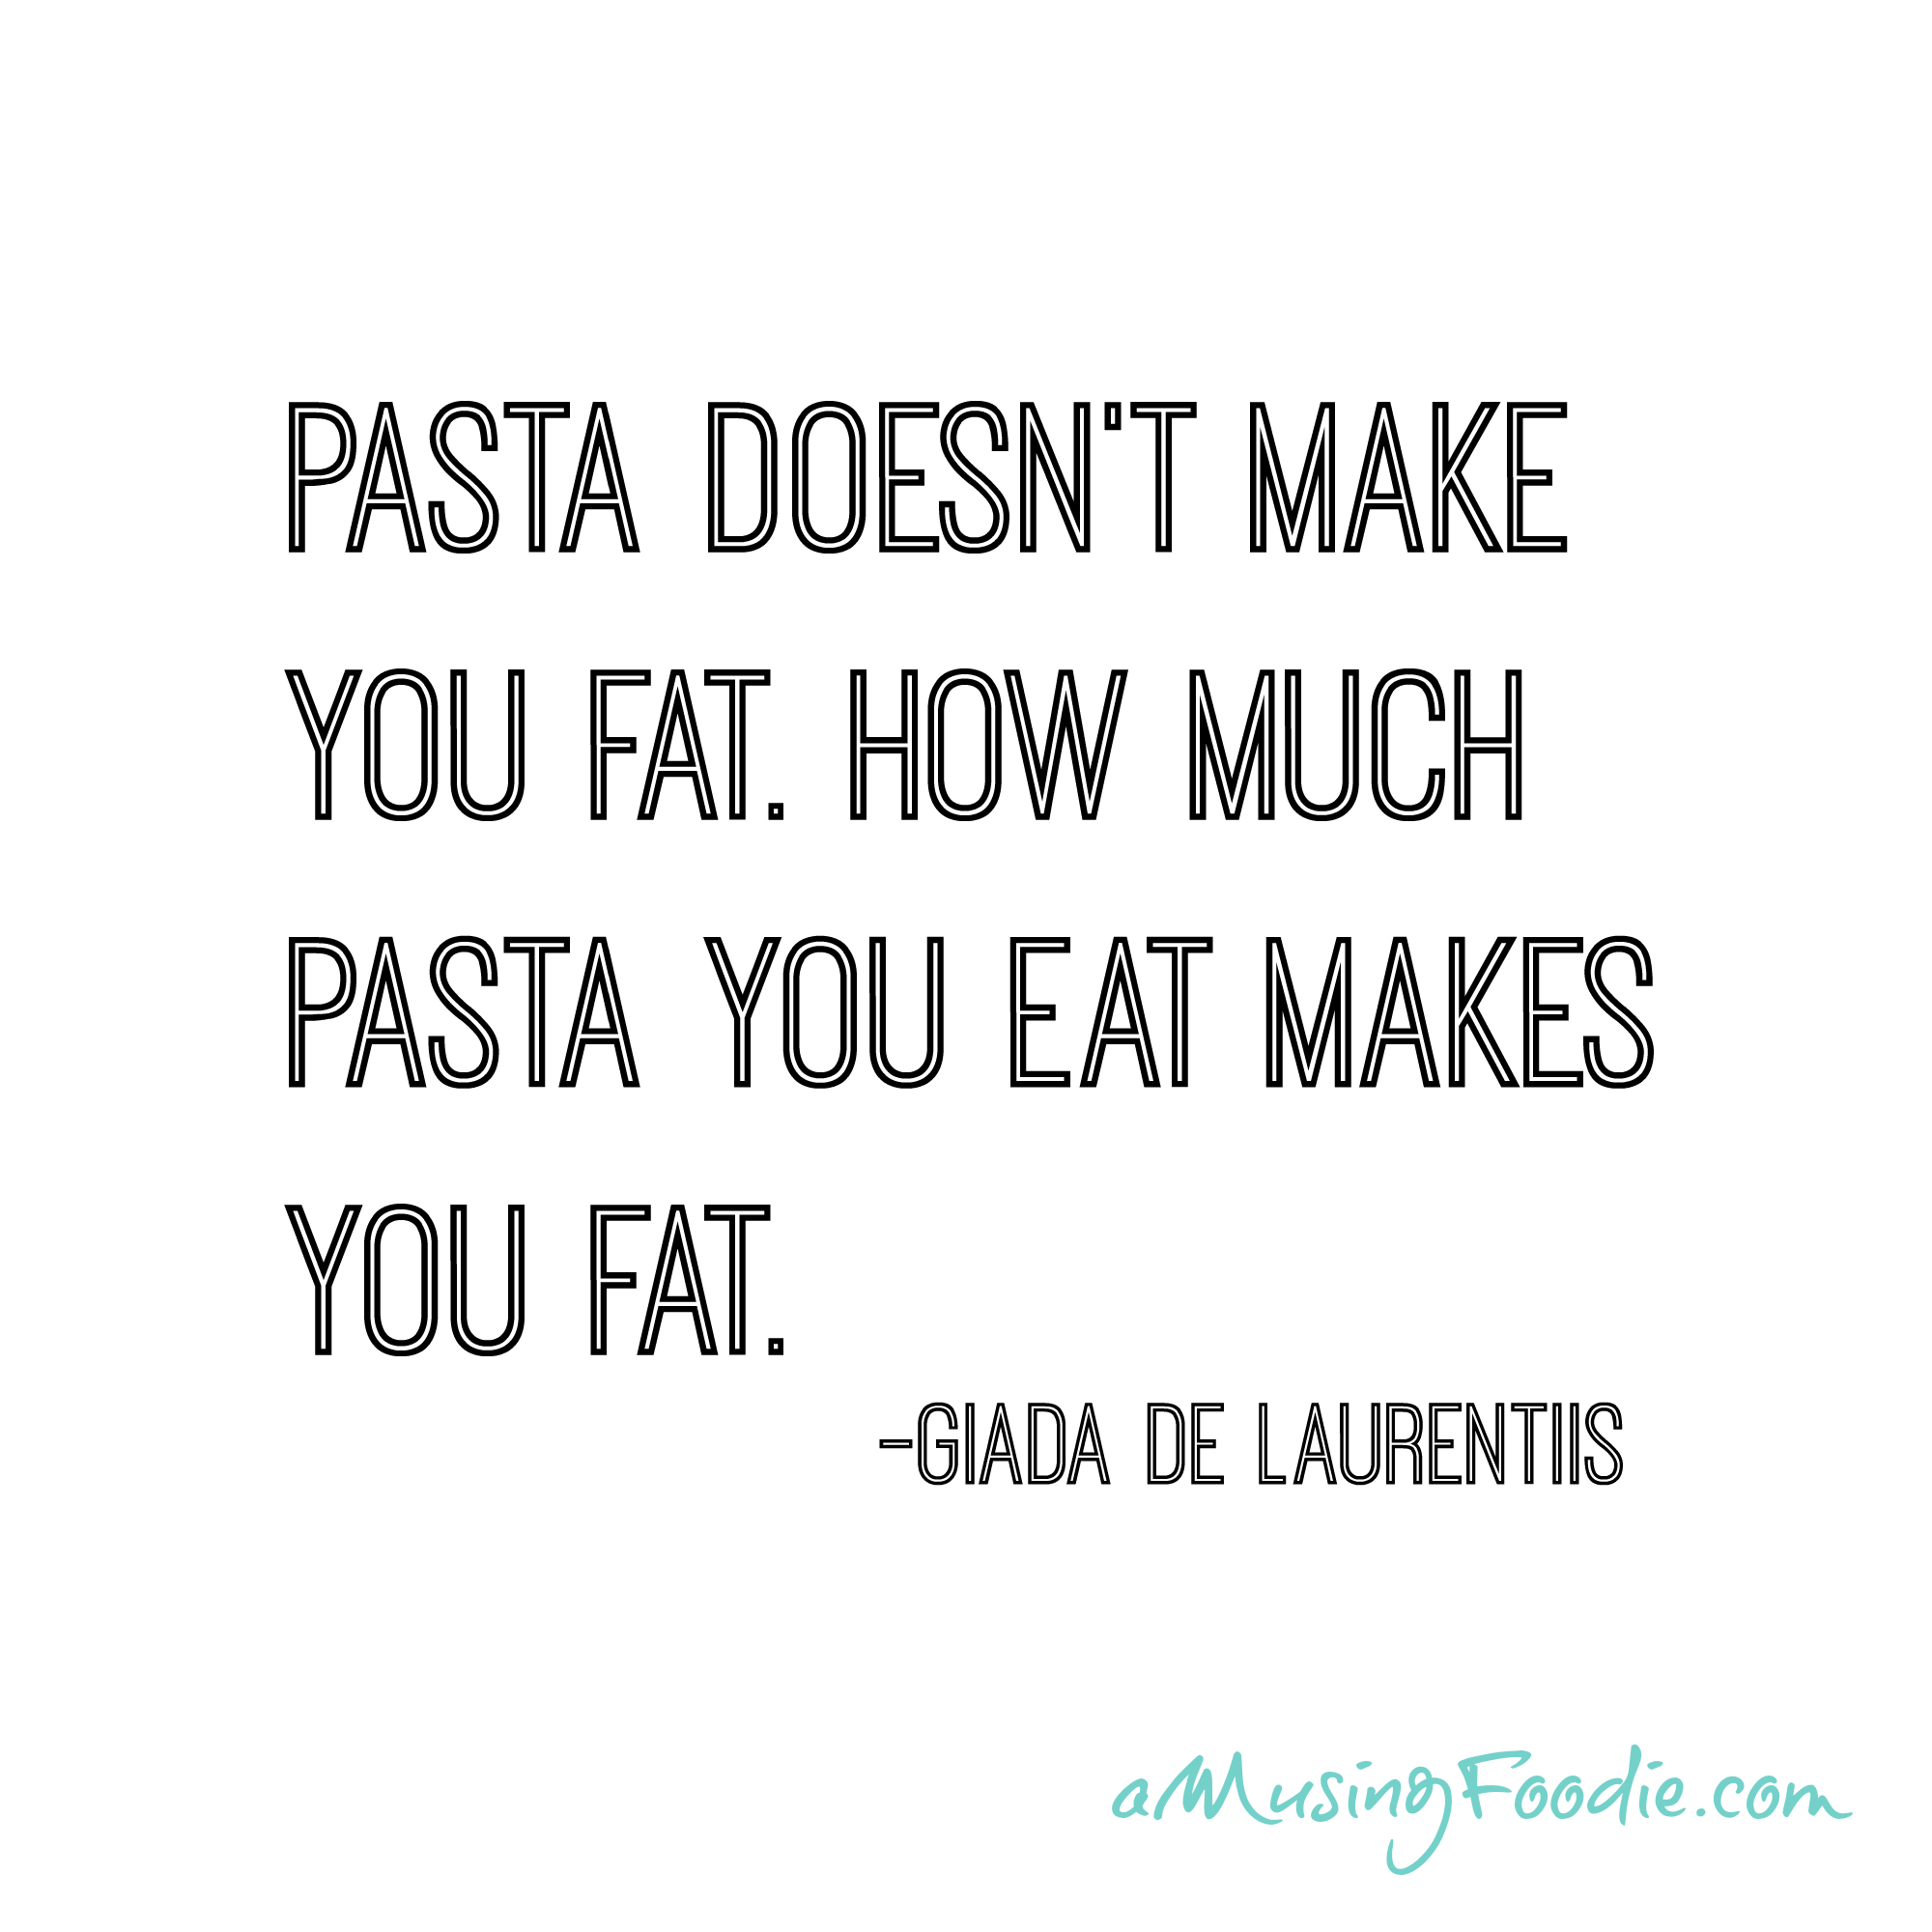 Pasta doesn’t make you fat. How much pasta you eat makes you fat. Giada De Laurentiis